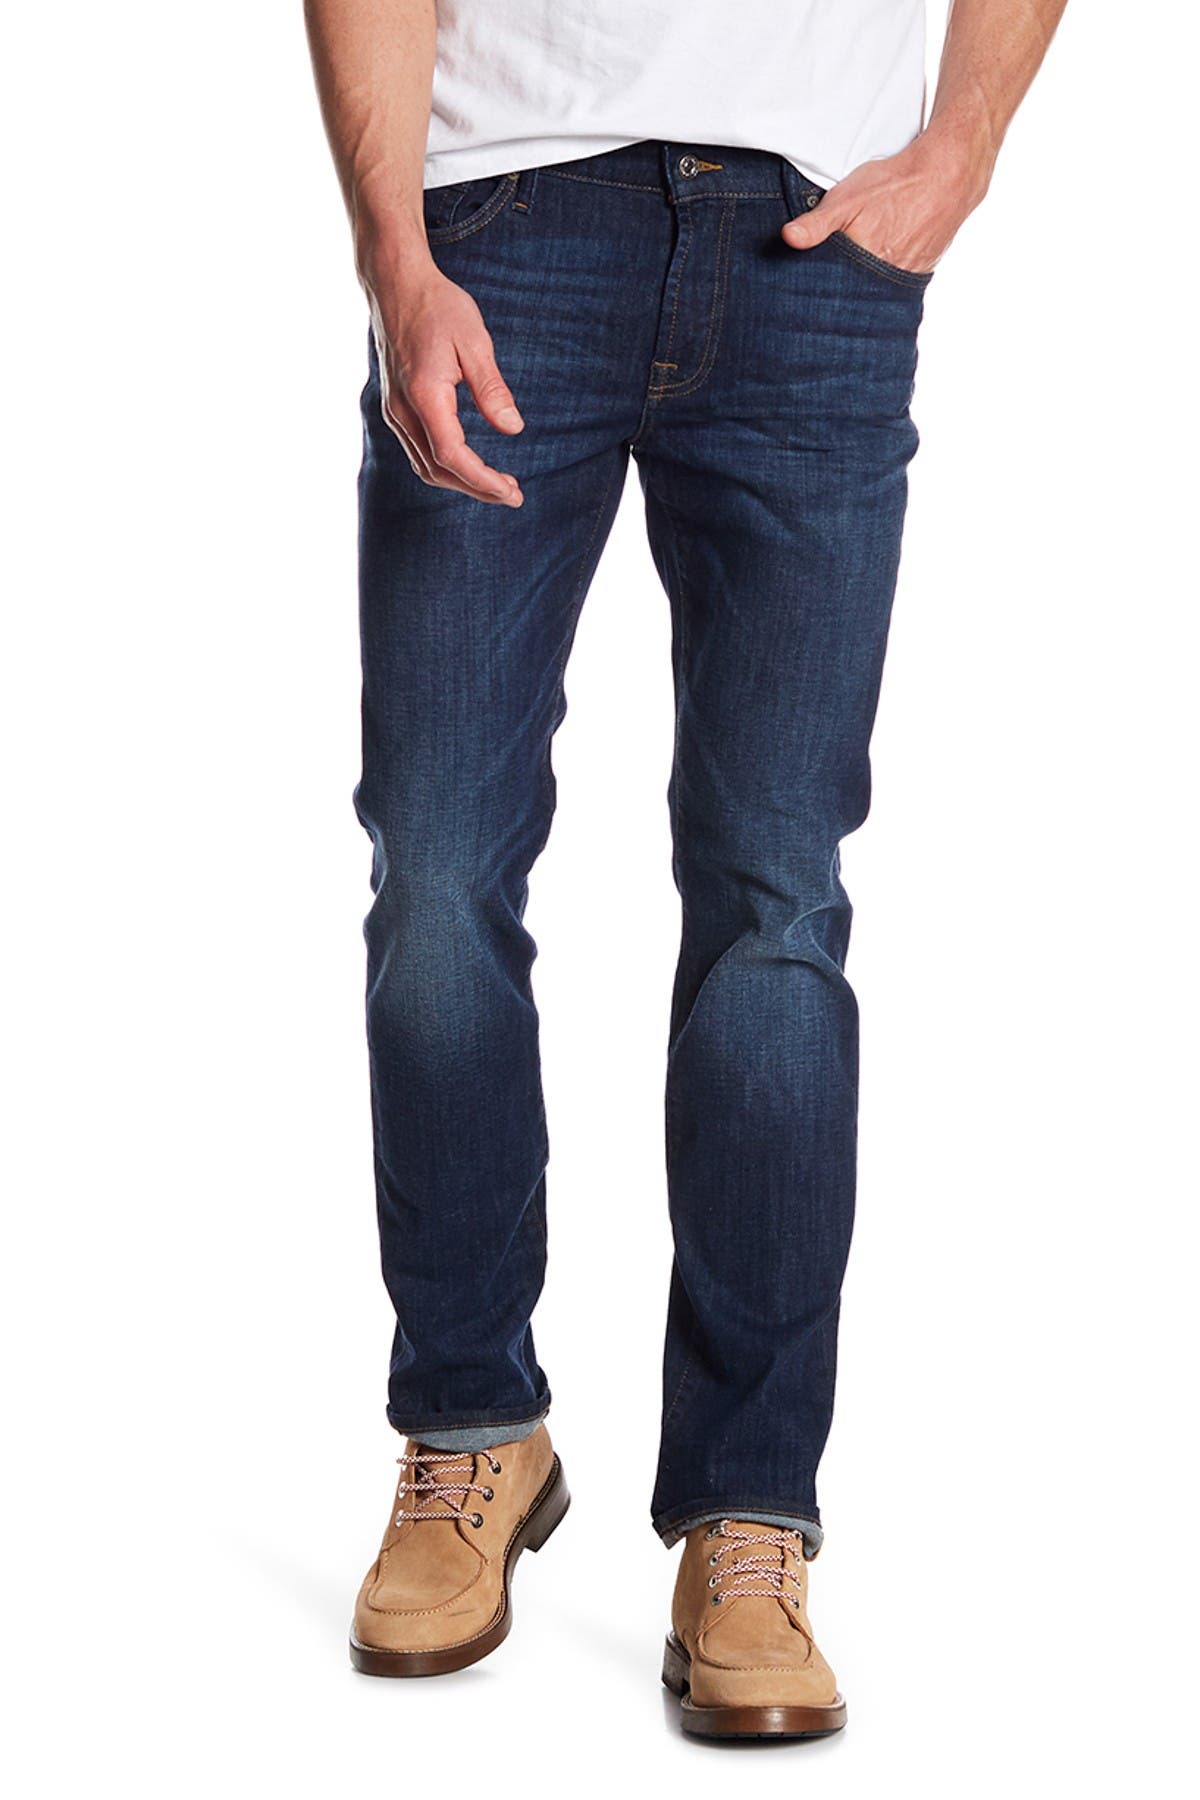 7 slimmy jeans